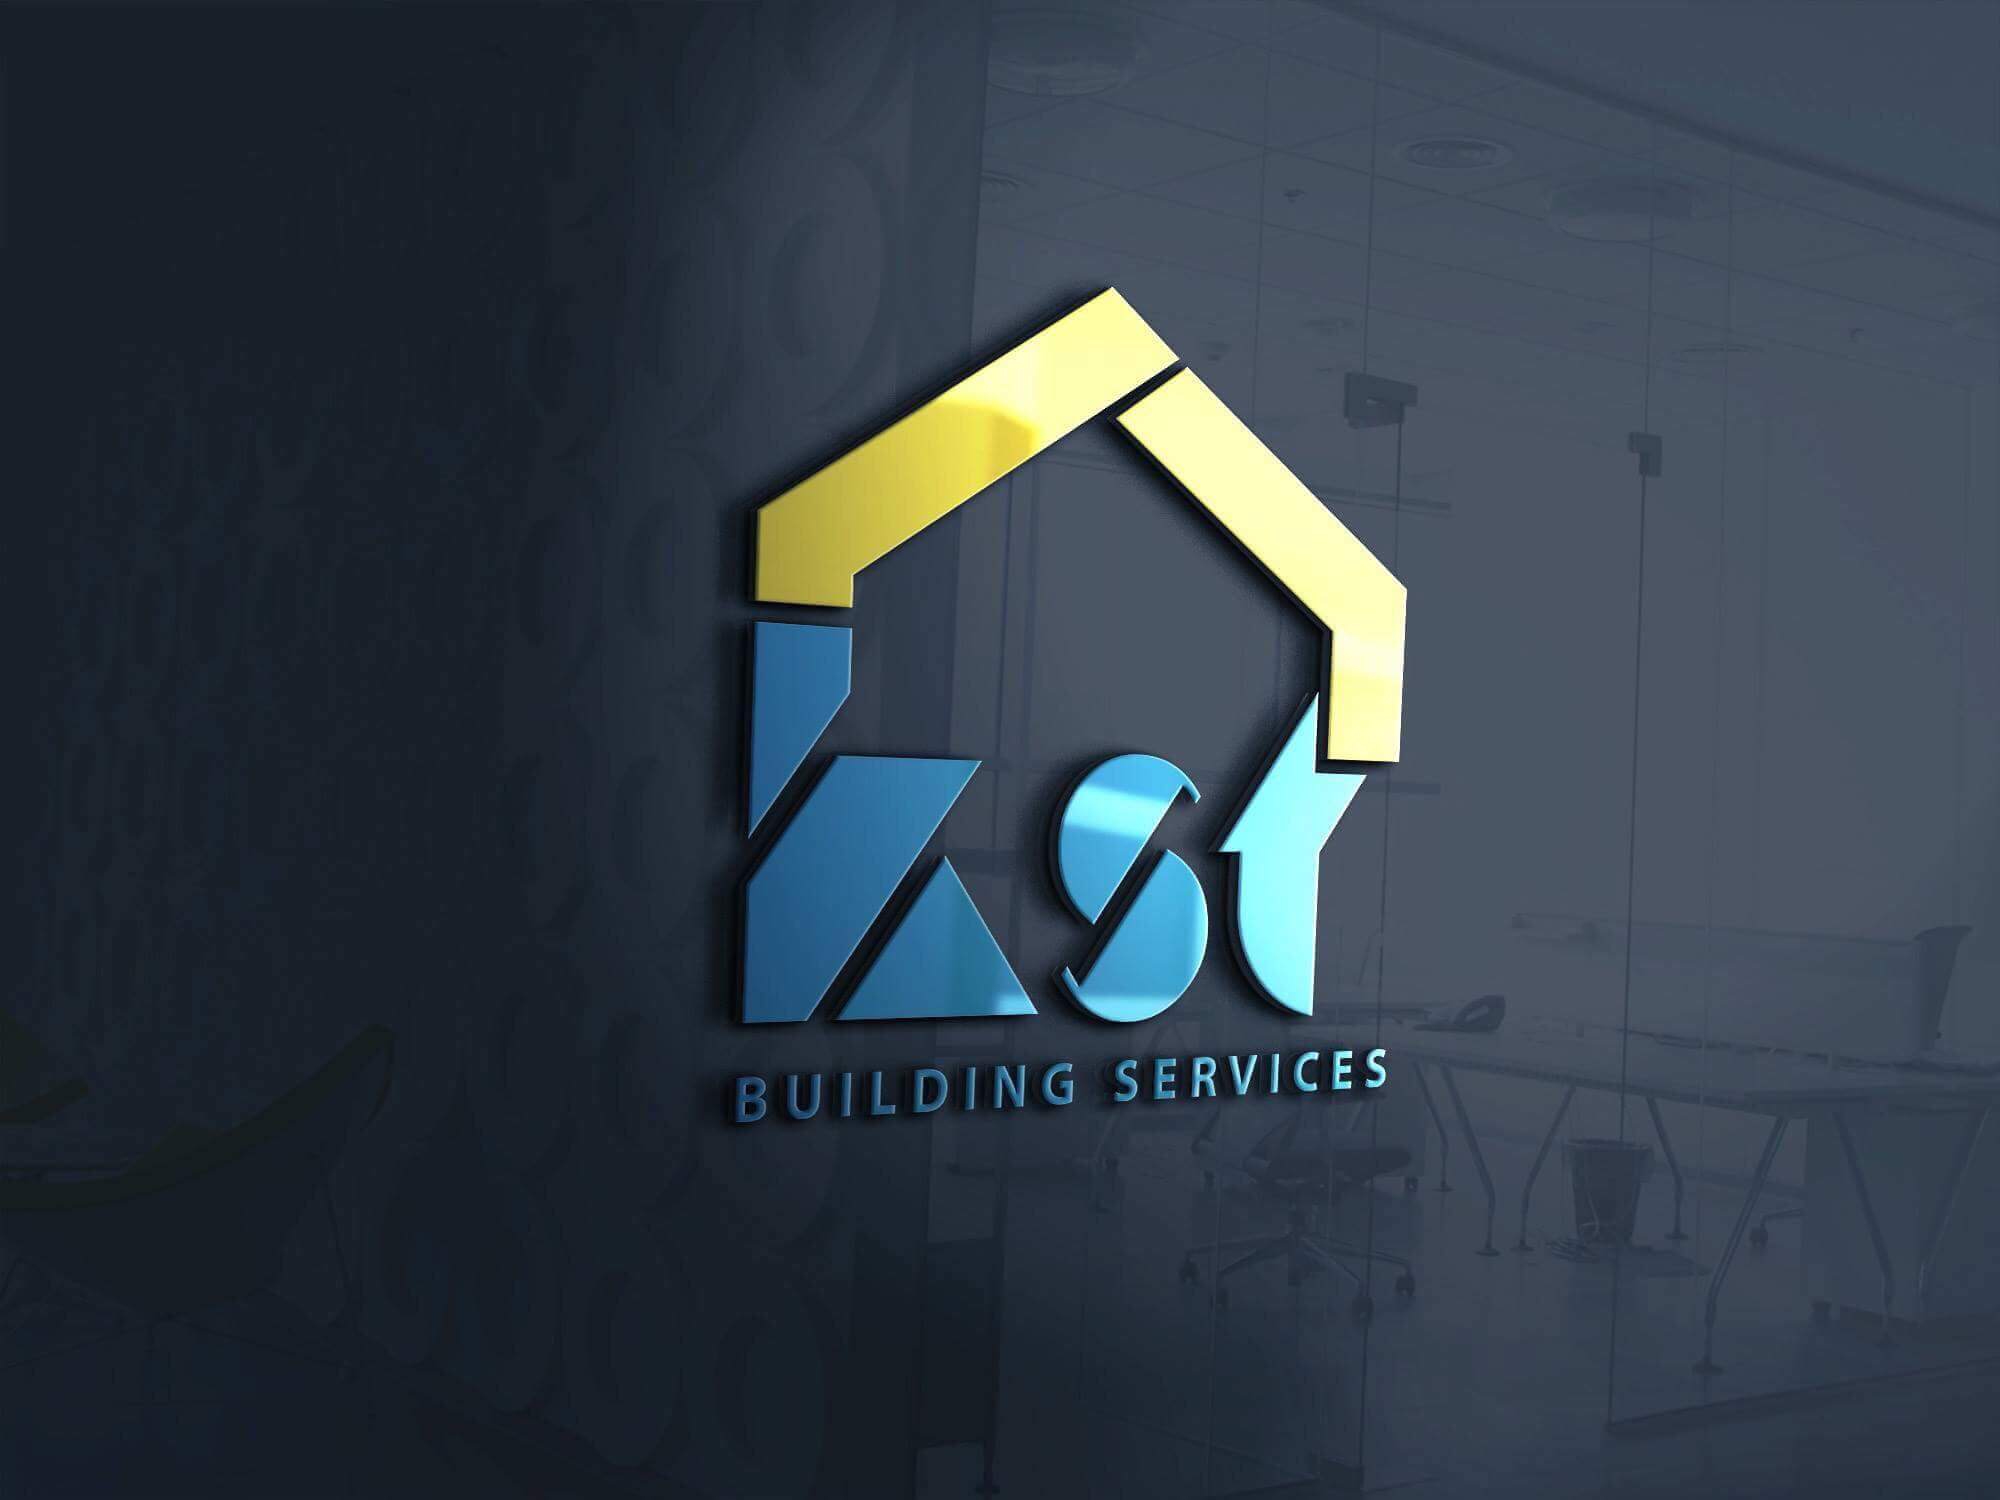 Kst Building Services Ltd - Global Cool